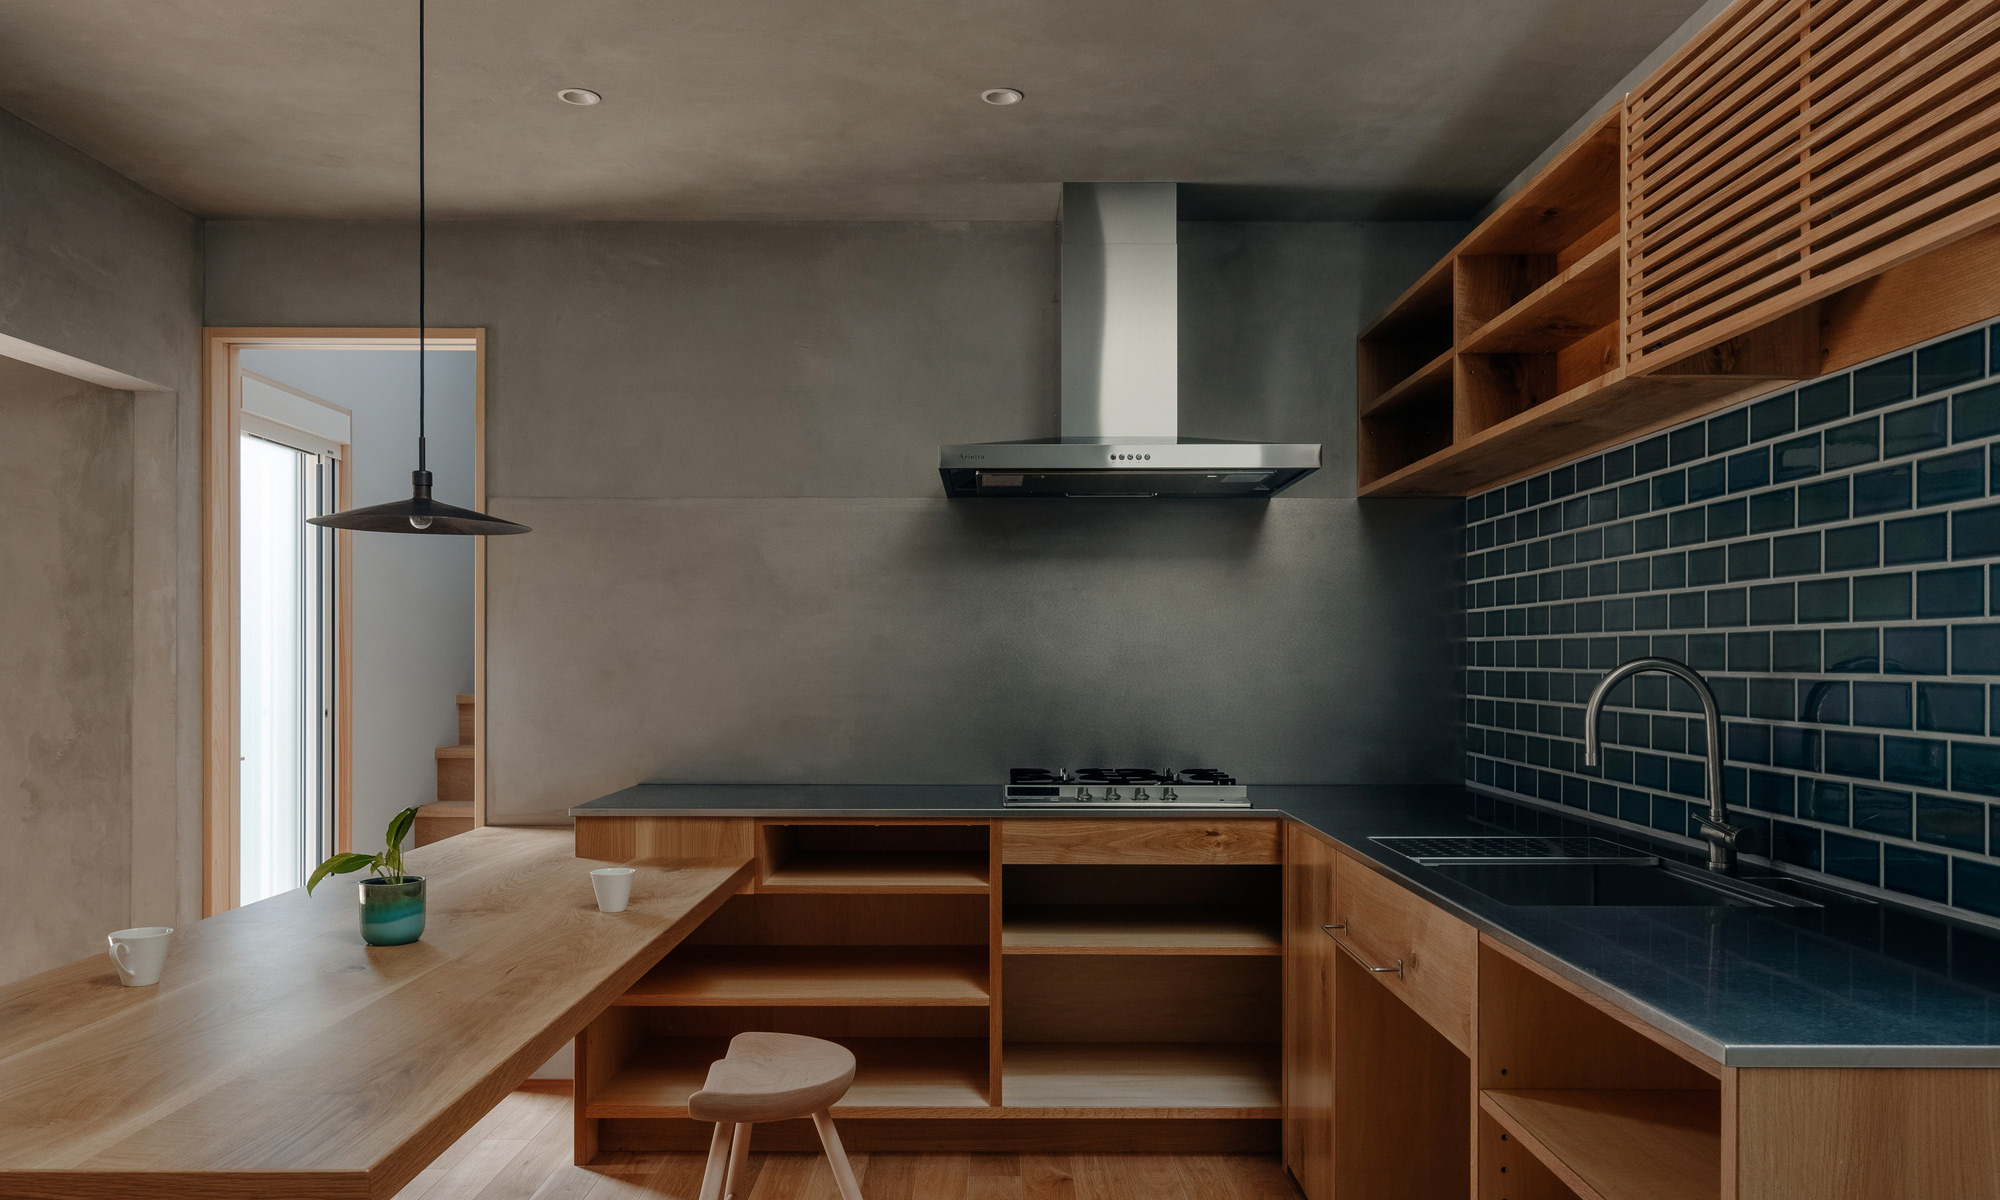 Green kitchen back splash by Hearth Architects